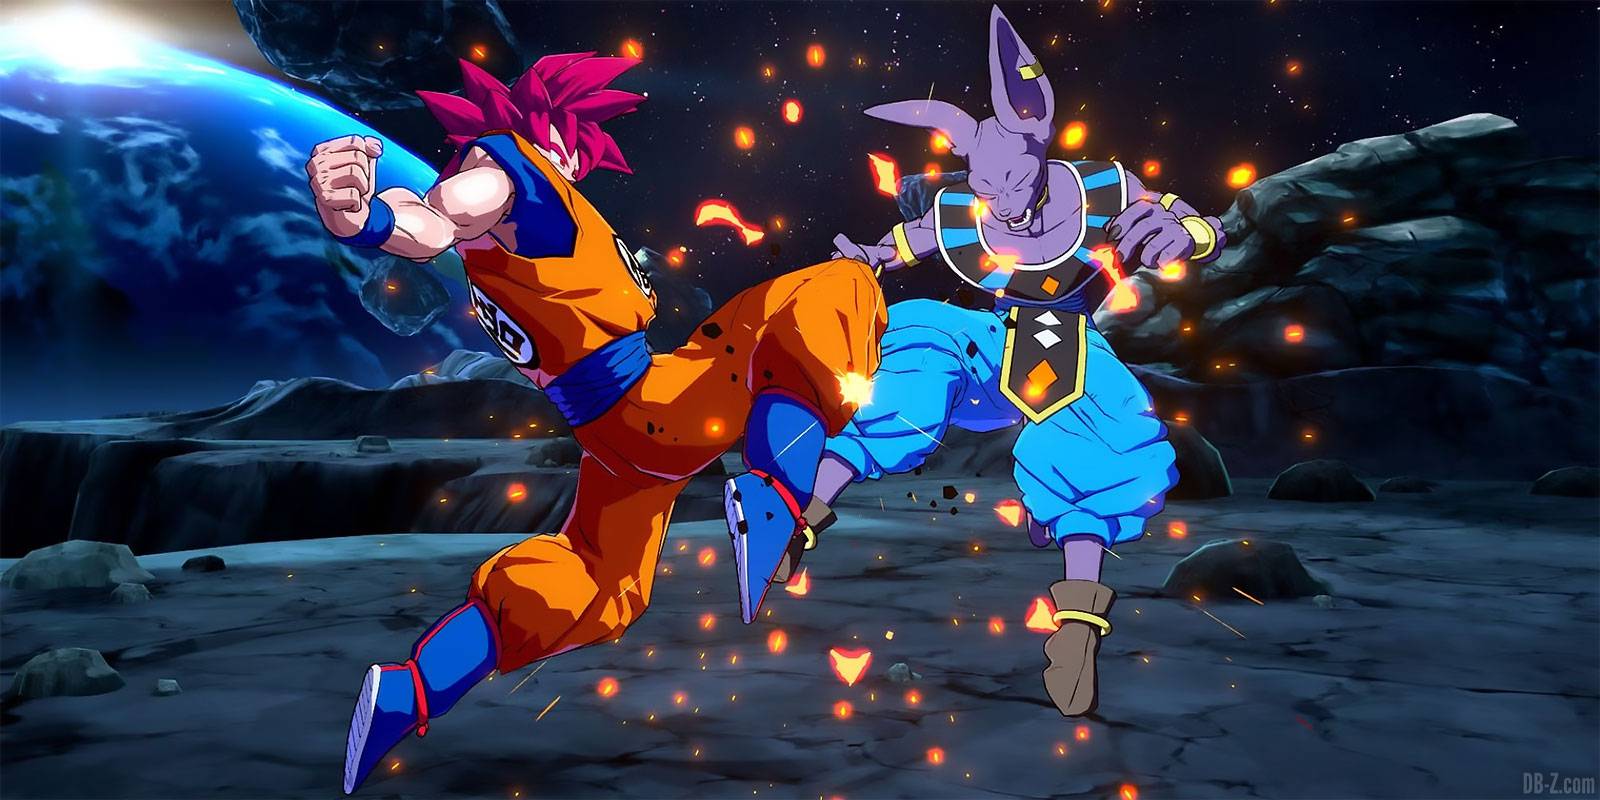 Goku Super Saiyan God vs Beerus FighterZ.